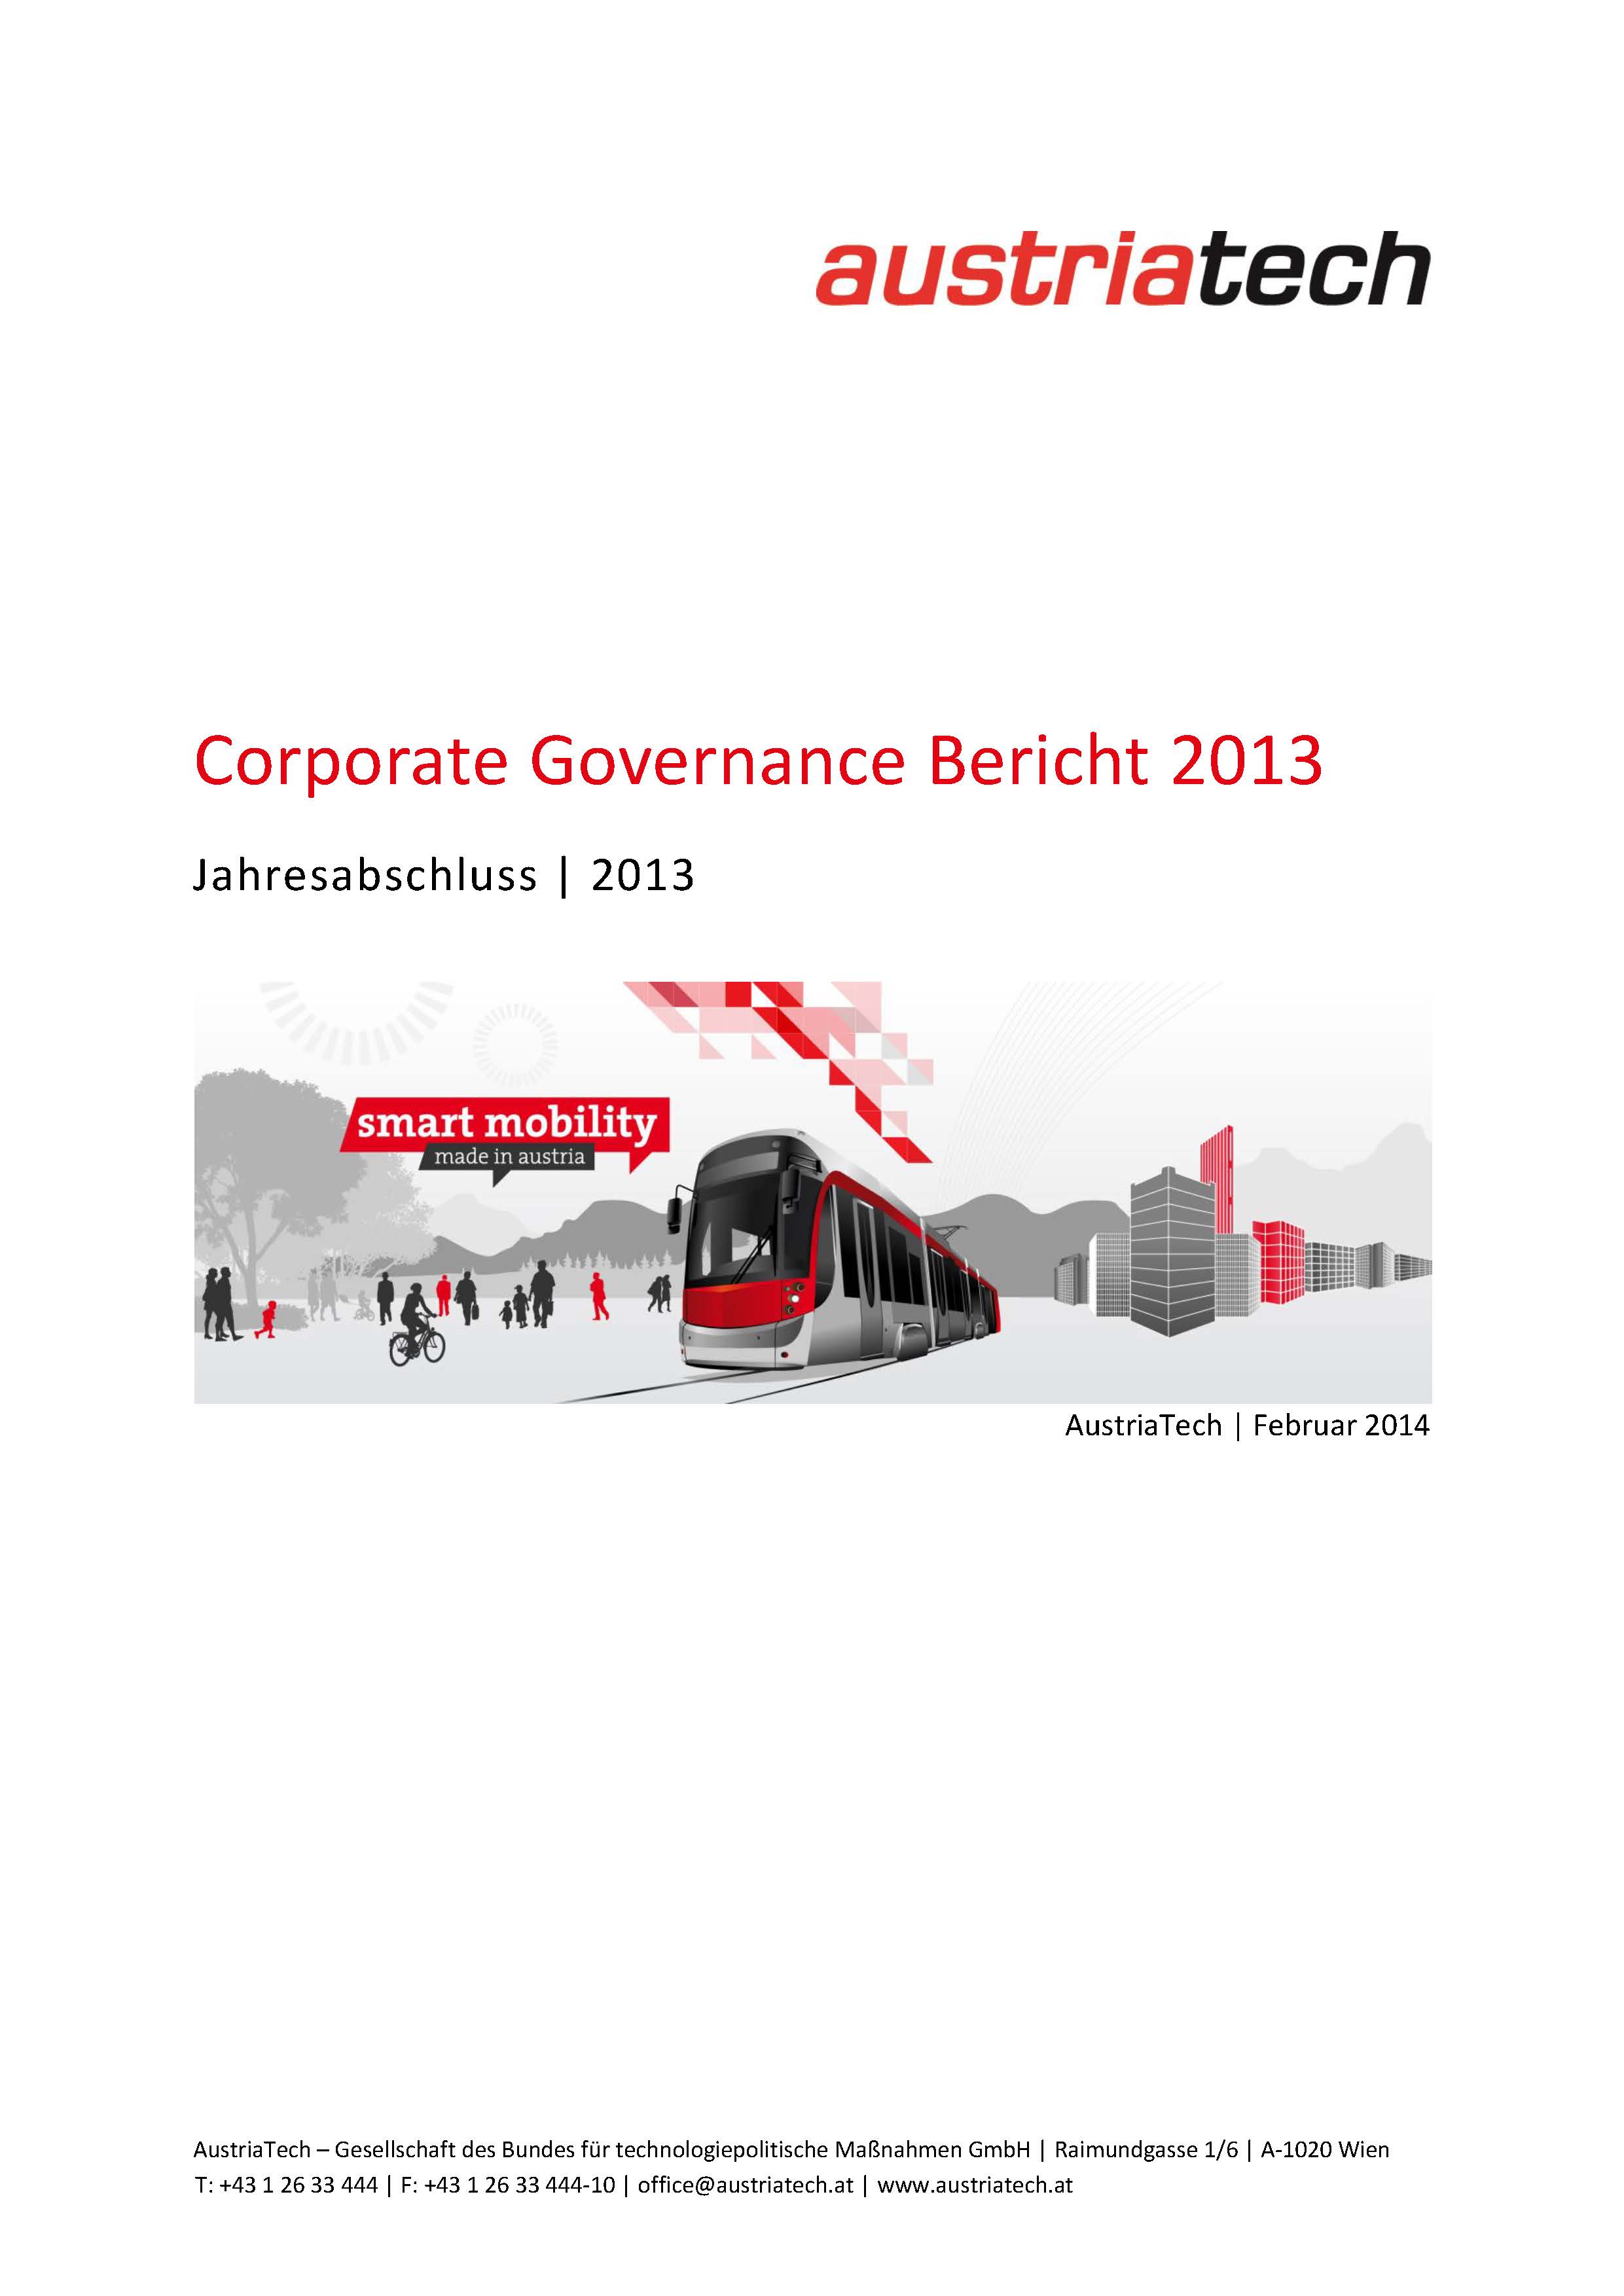 AustriaTech Corporate Governance 2013